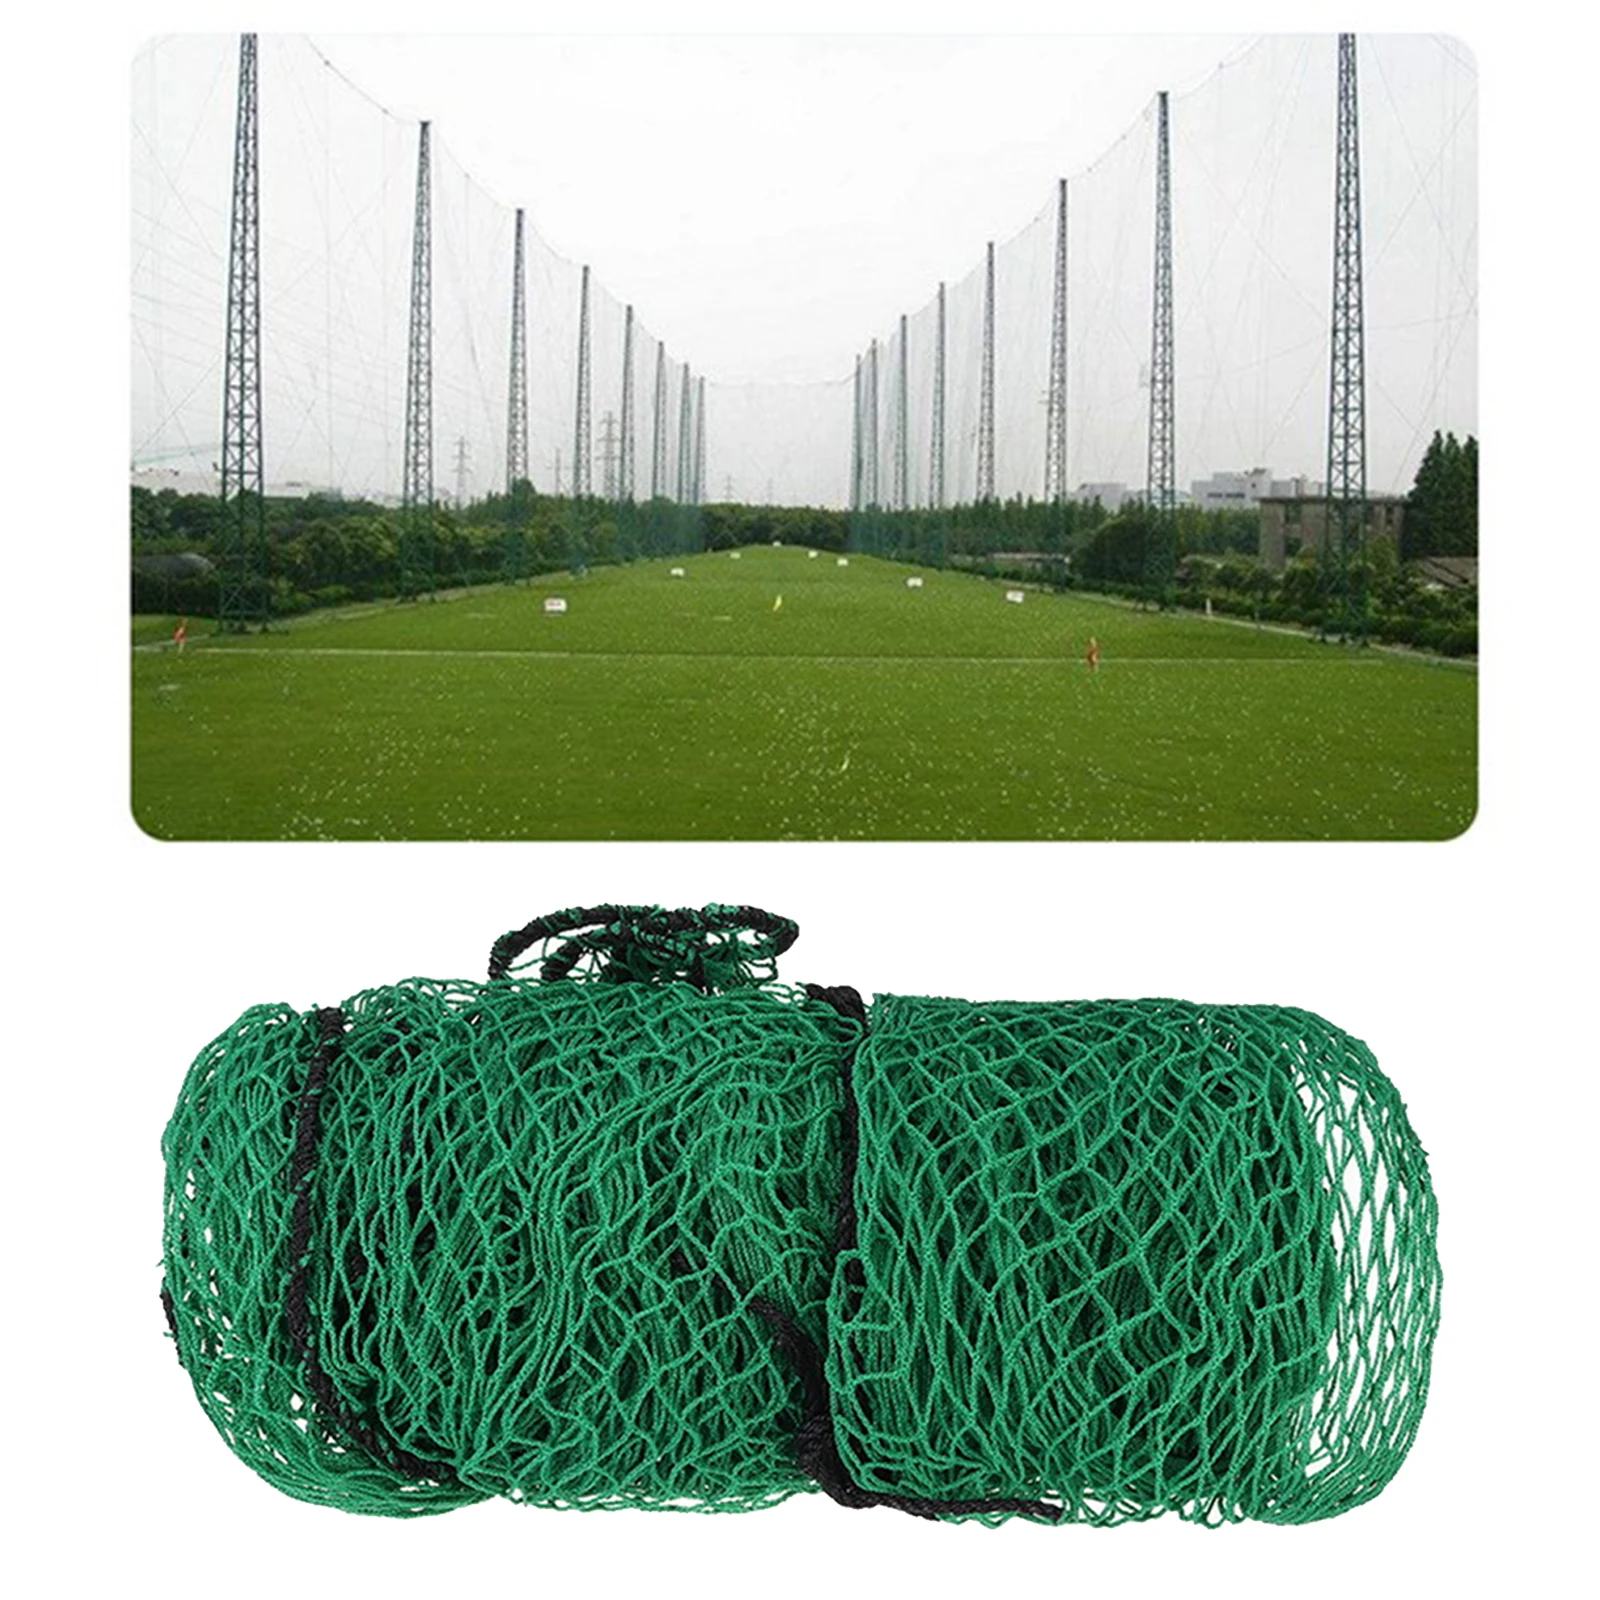 300cm Golf Practice Net Heavy Duty Impact Border Sports Barrier Training Aids Mesh Netting Indoor/Outdoor